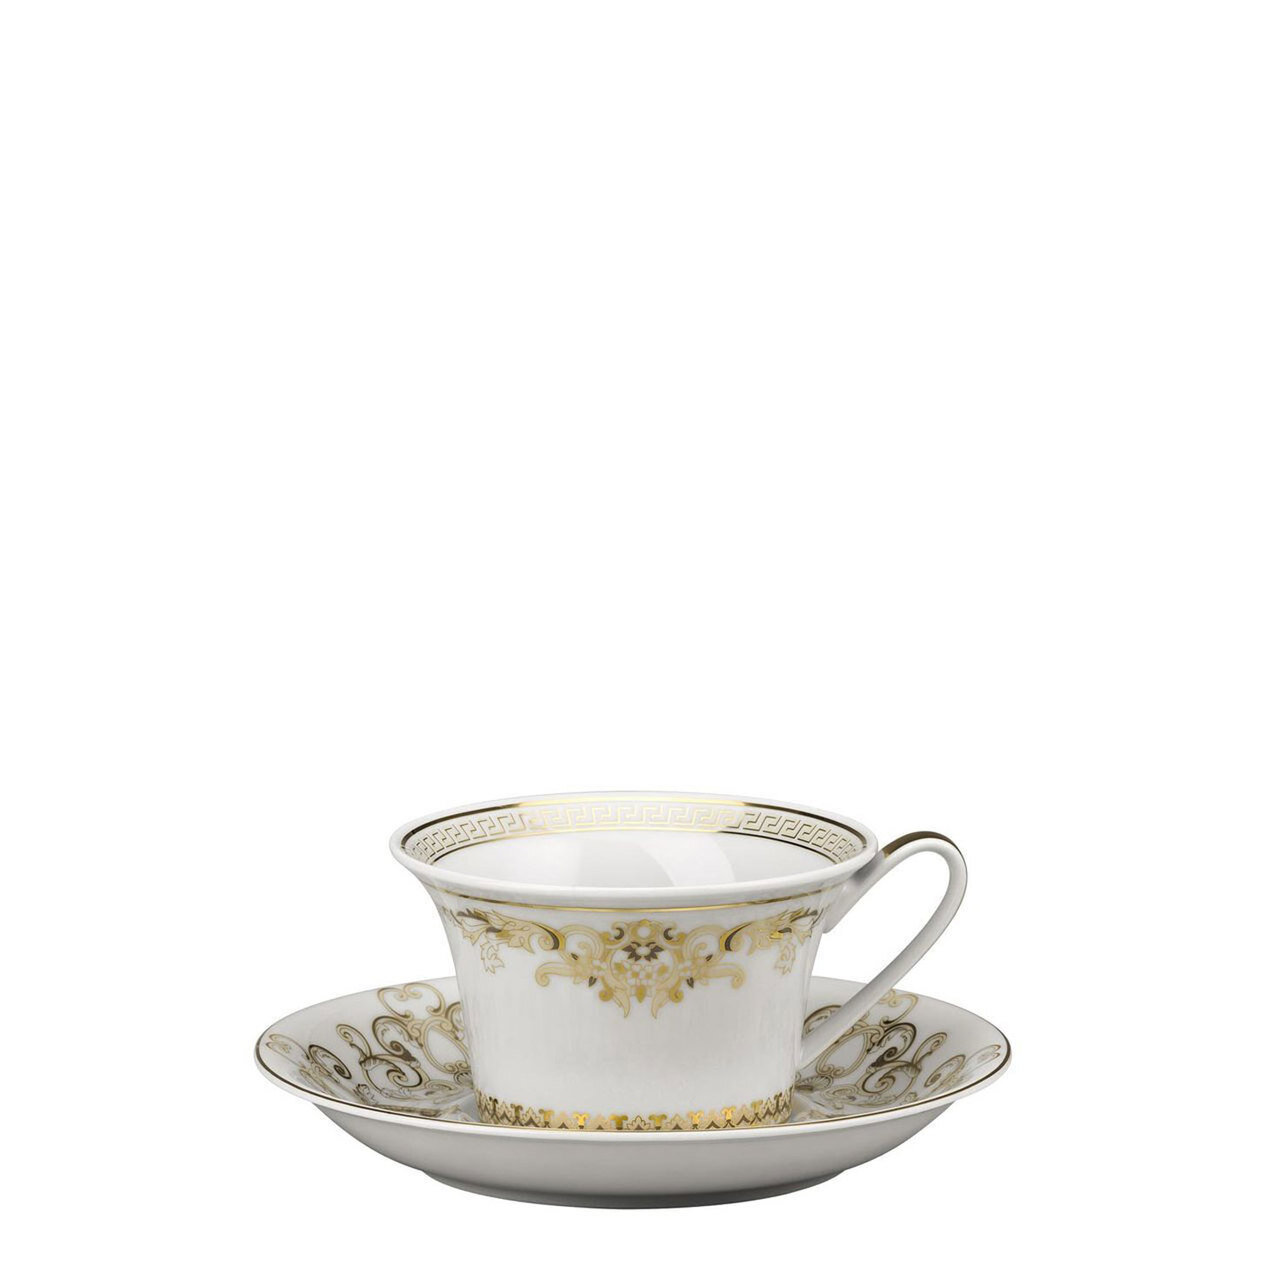 Versace Medusa Gala Tea Cup and Saucer 6 1/4 Inch 7 oz.